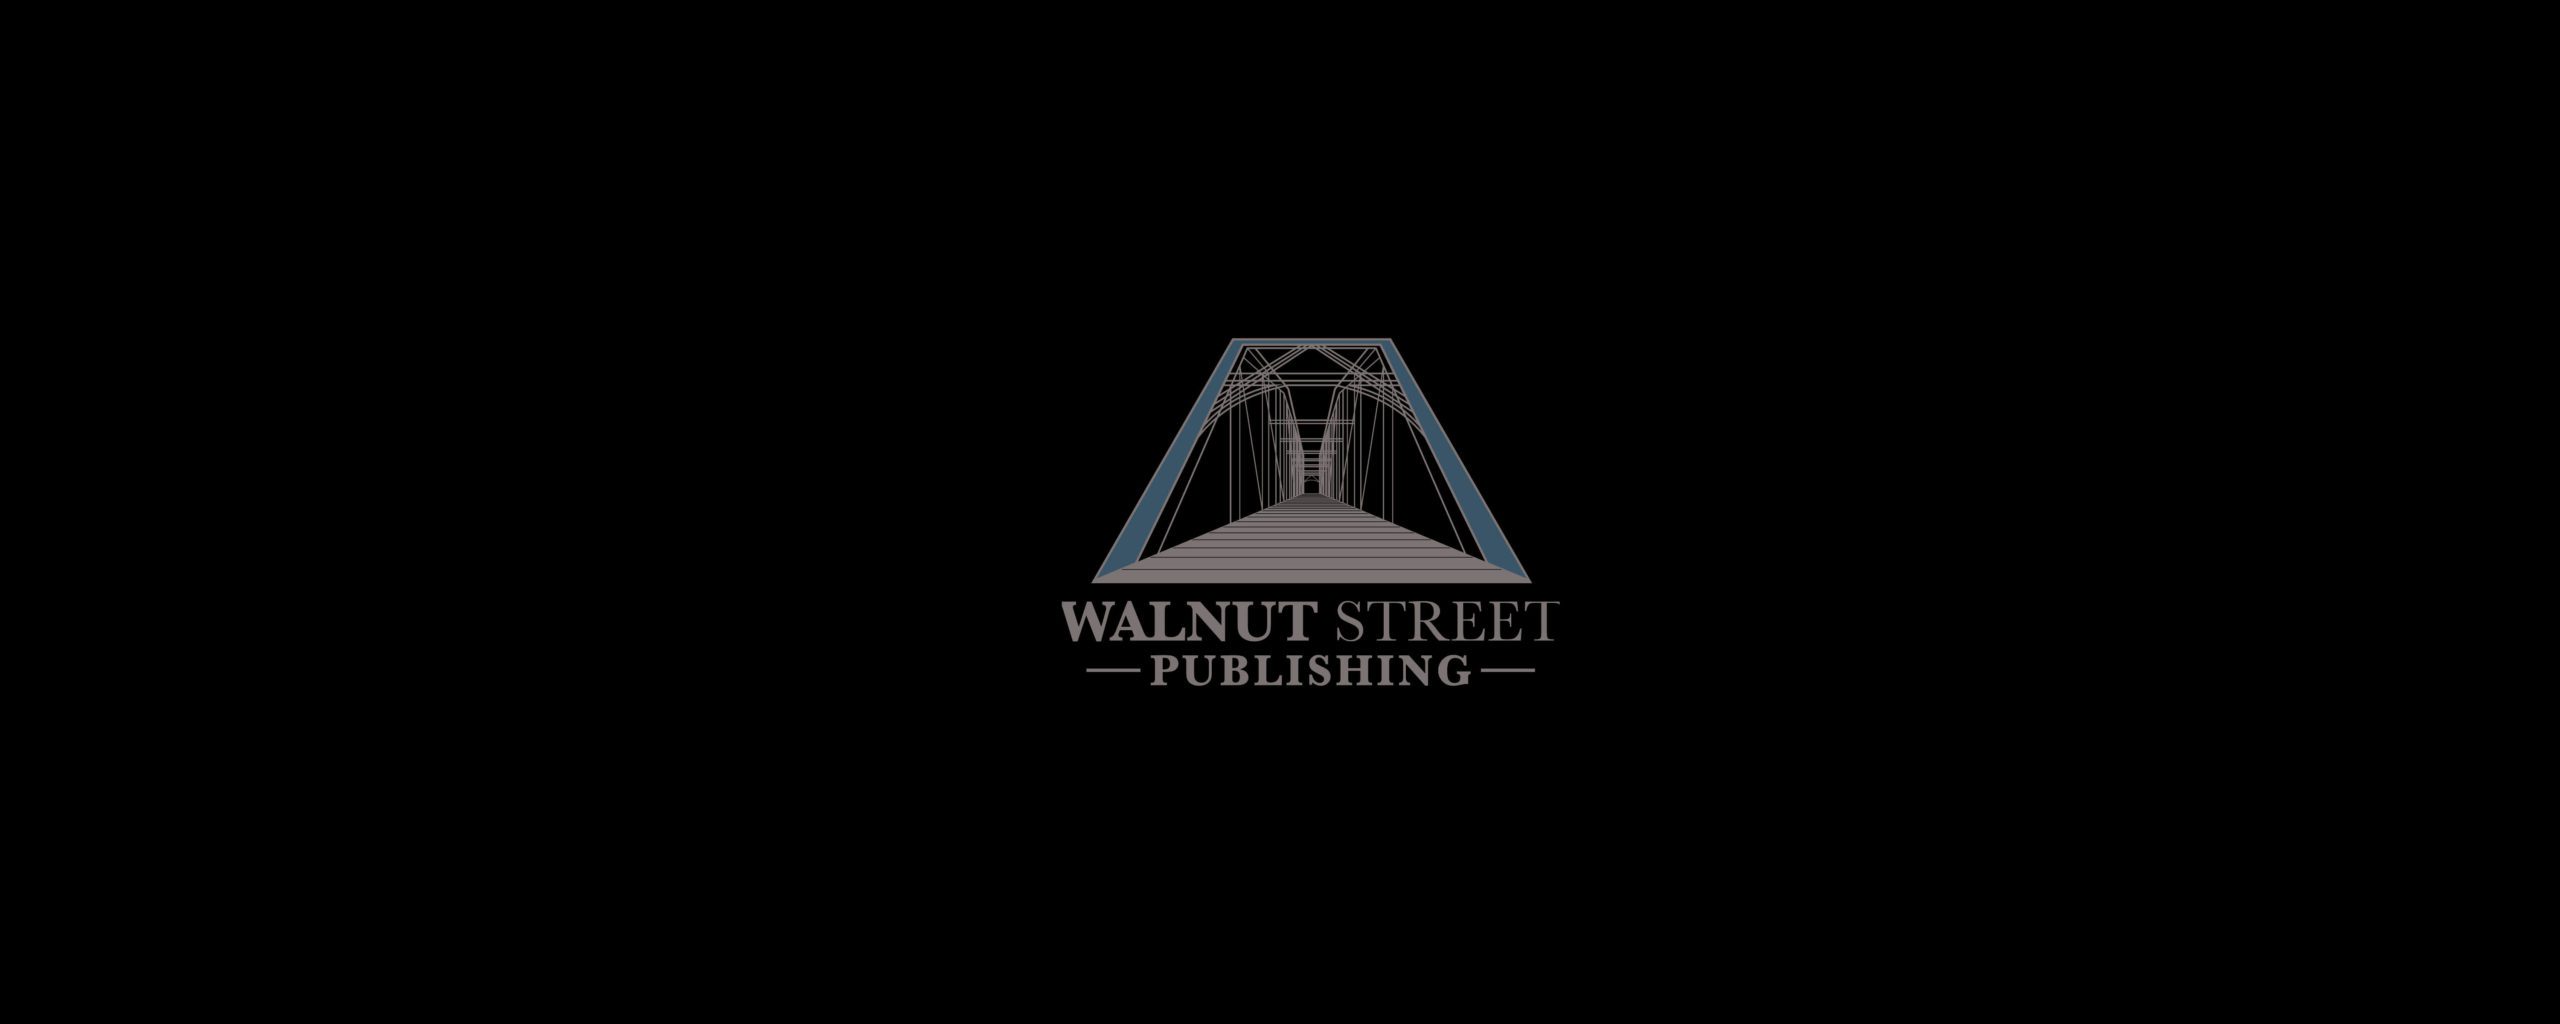 Walnut Street Publishing’s Weekly Writing Prompt